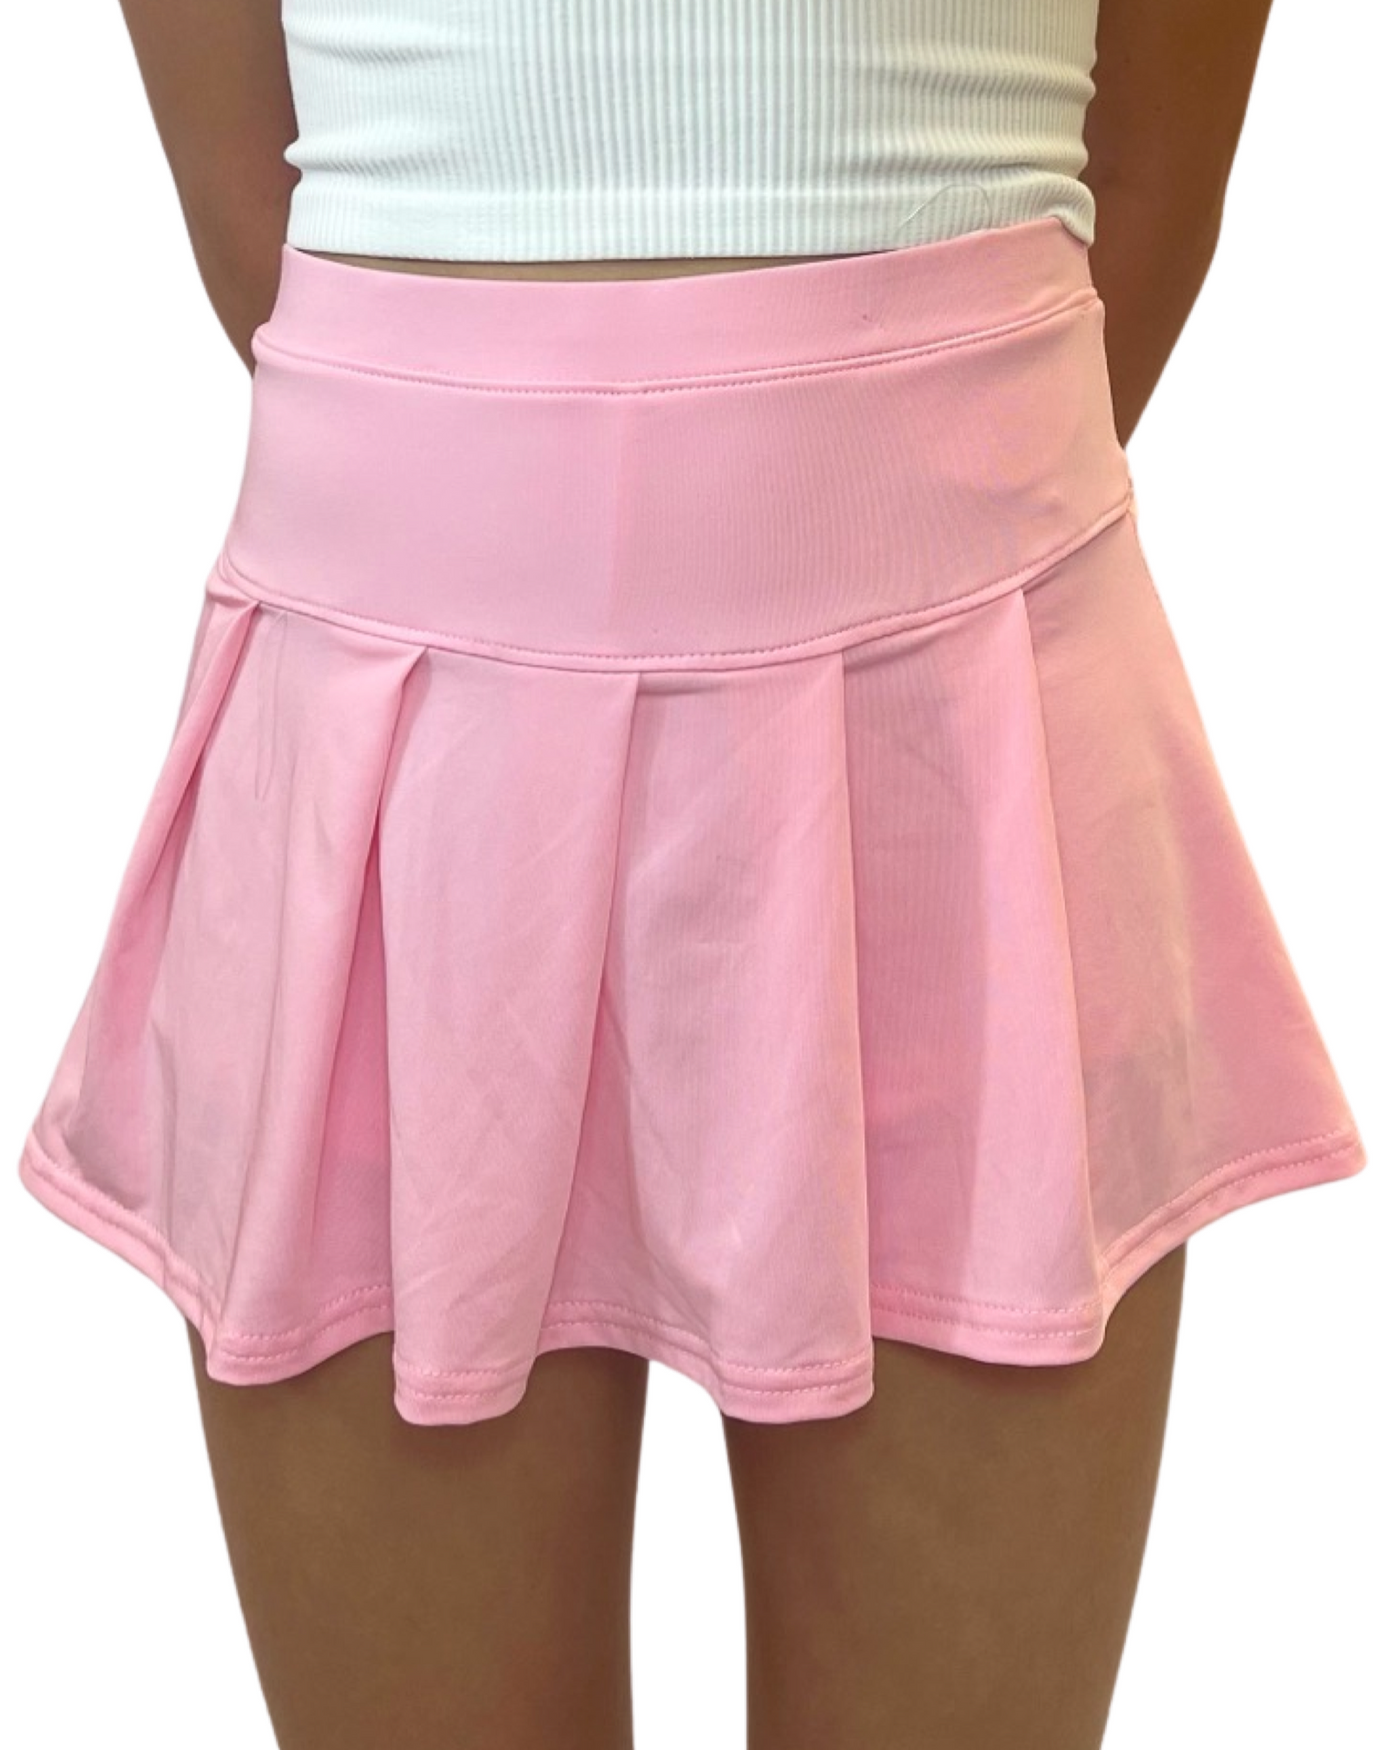 Tennis Skort Light Pink